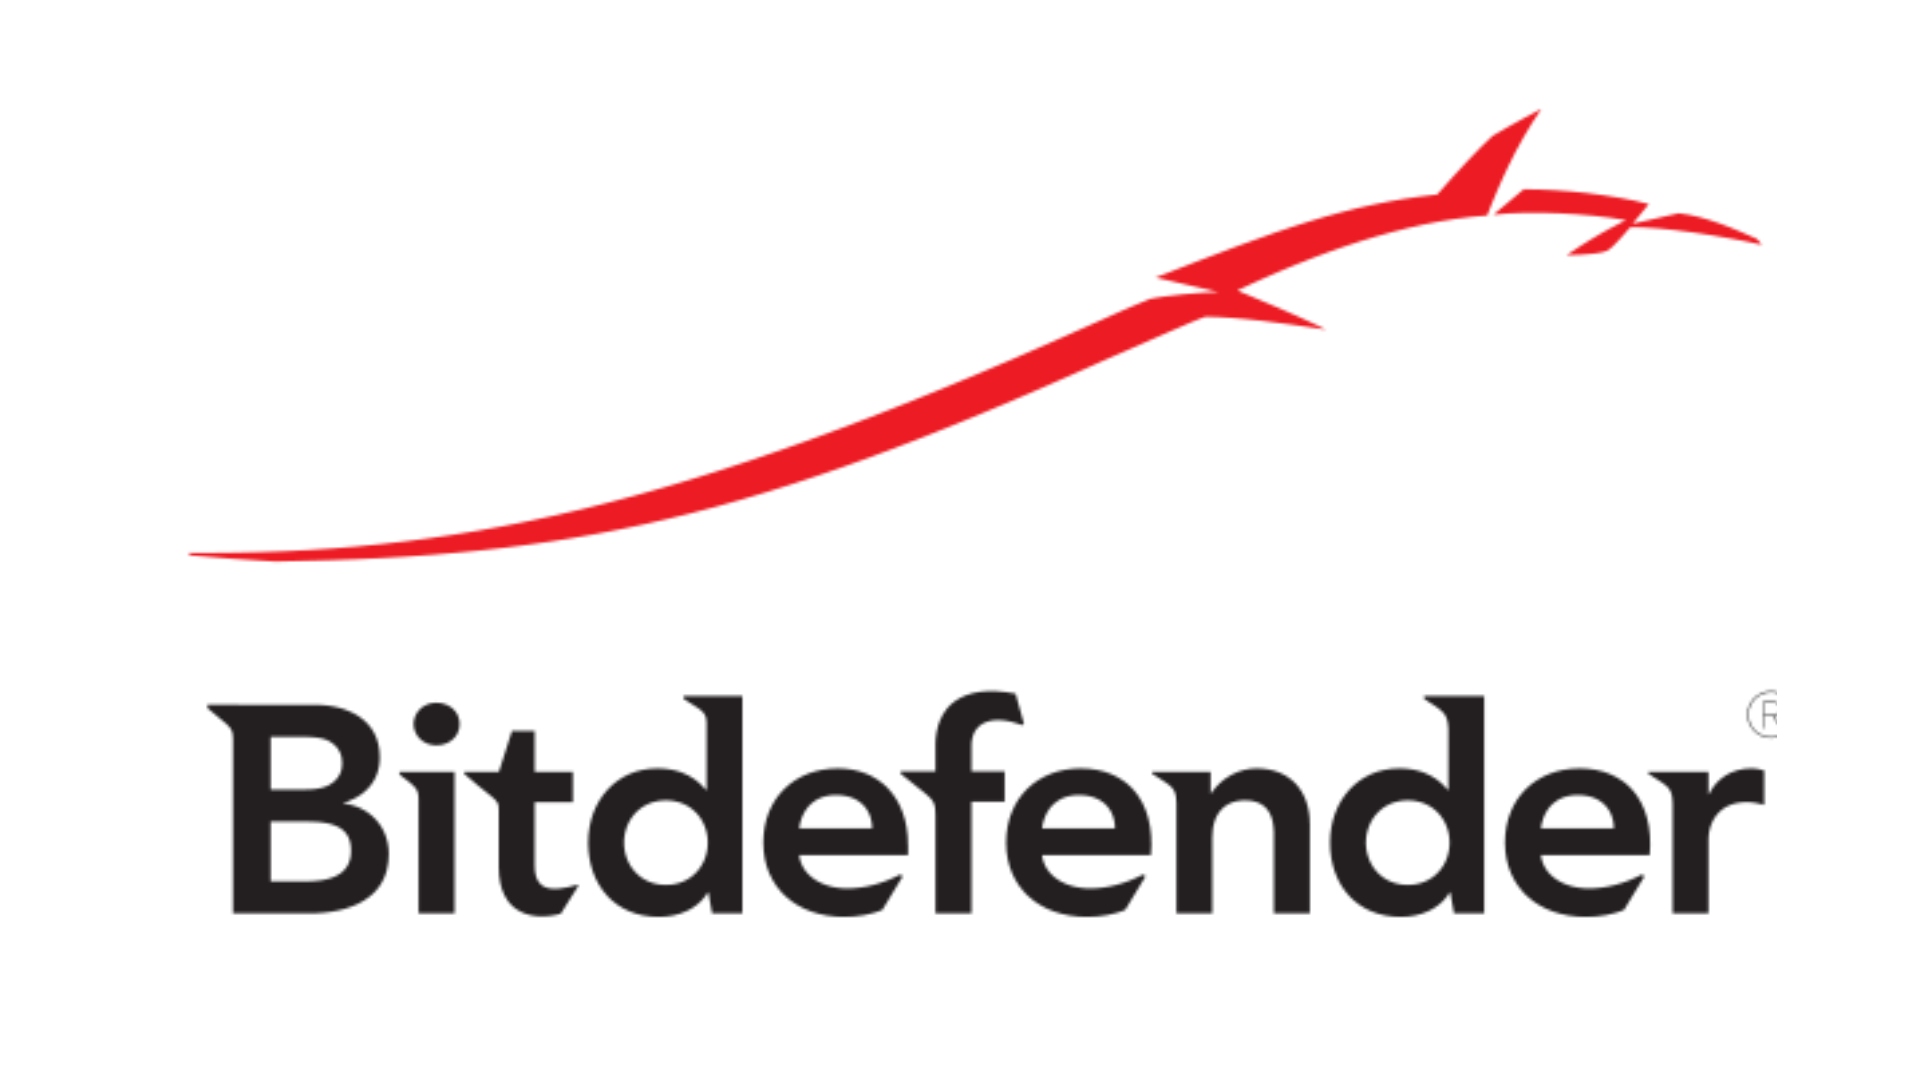 Cyber Security Awareness month antivirus recommendation: Bitdefender.